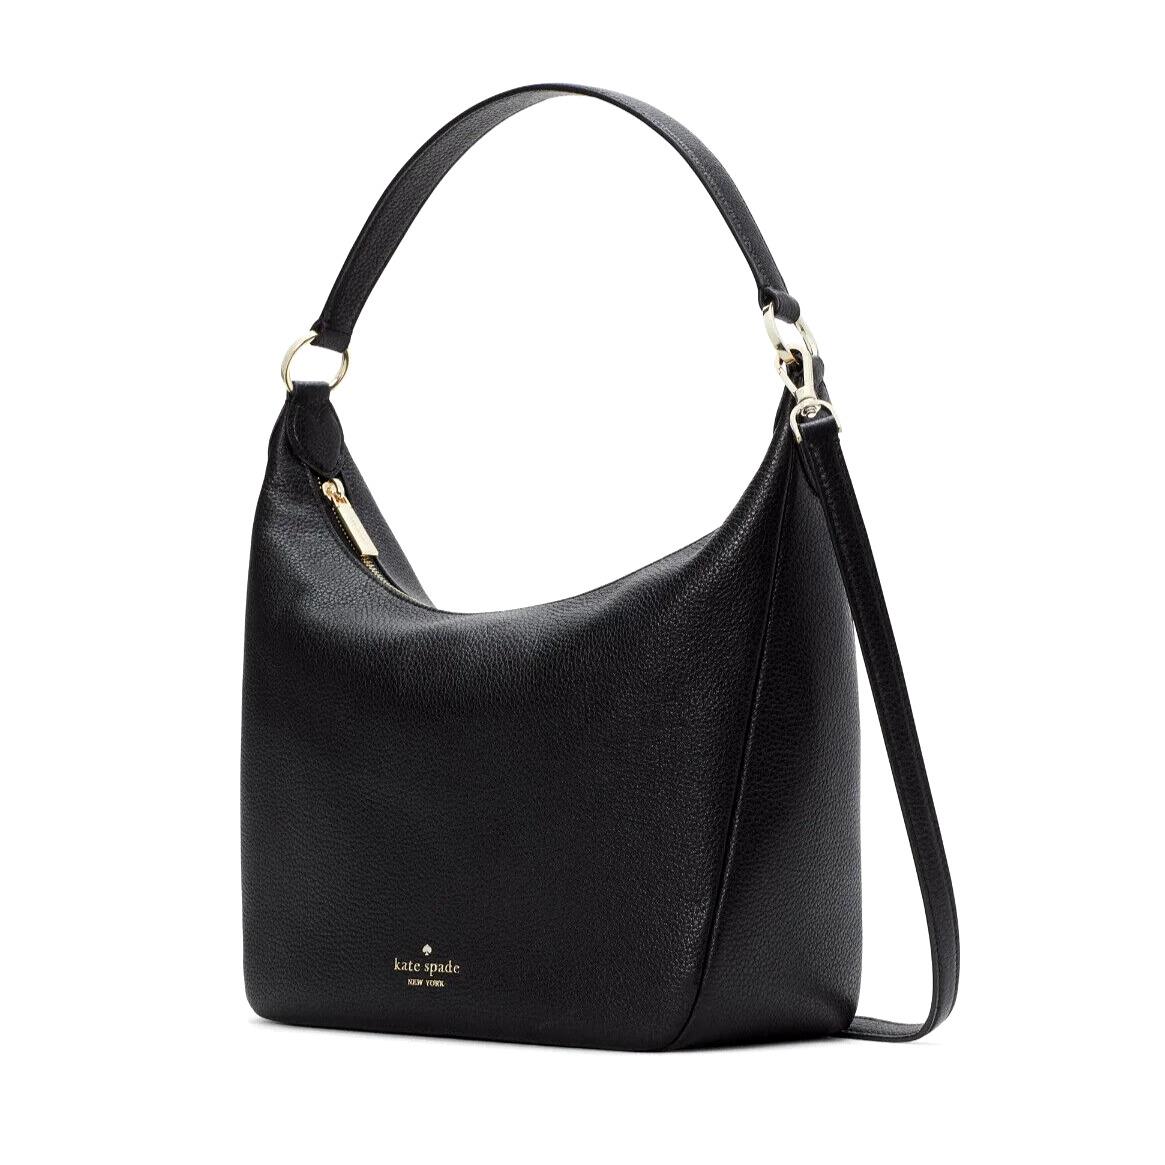 New Kate Spade Leila Hobo Shoulder Bag Pebble Leather Black